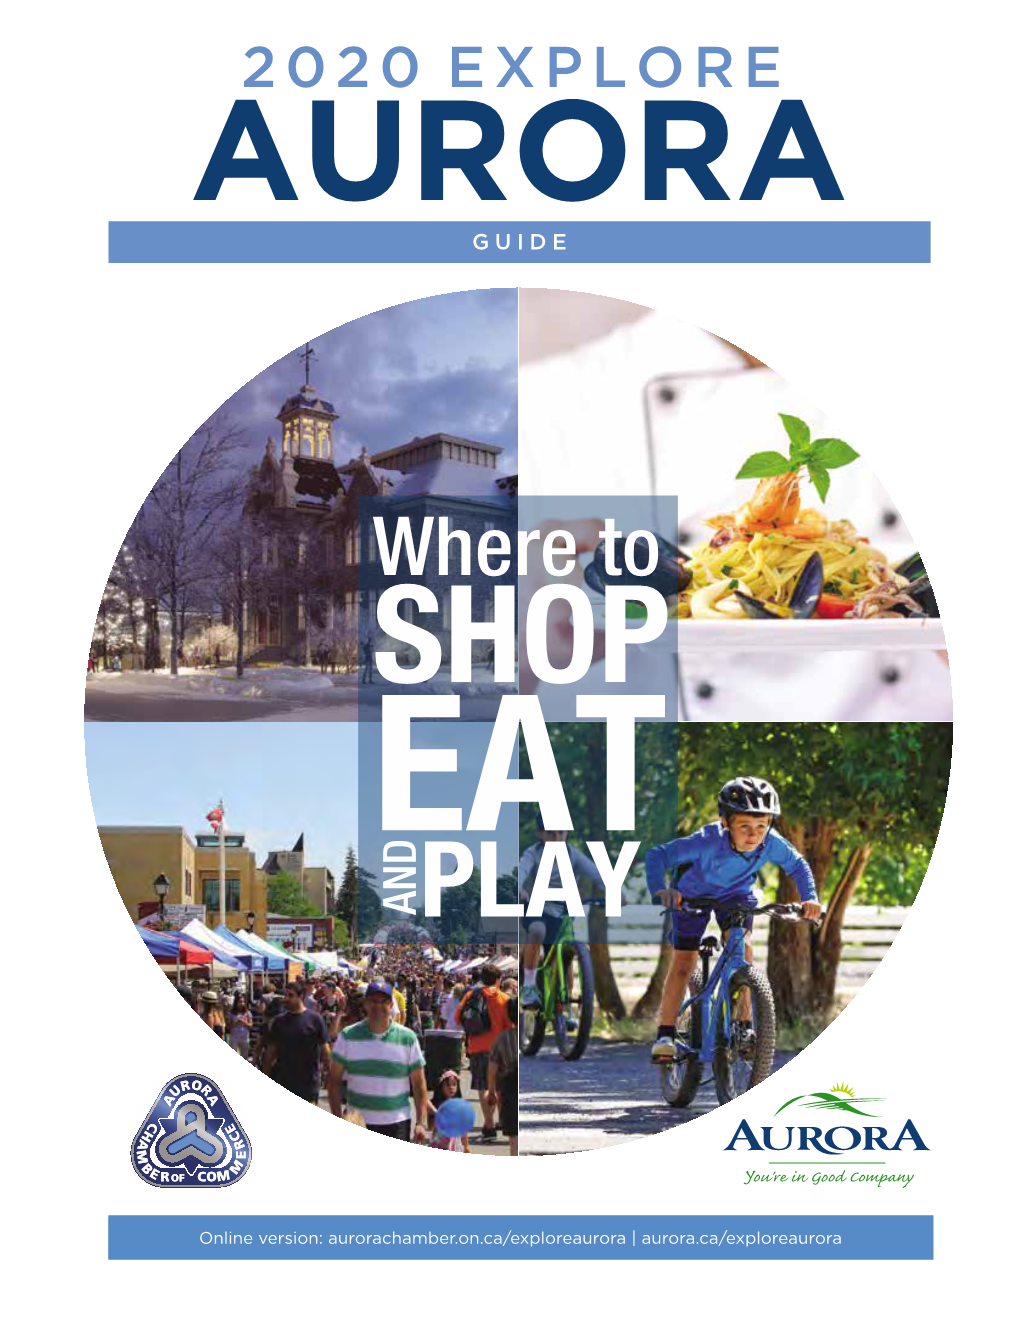 2020 Explore Aurora Guide